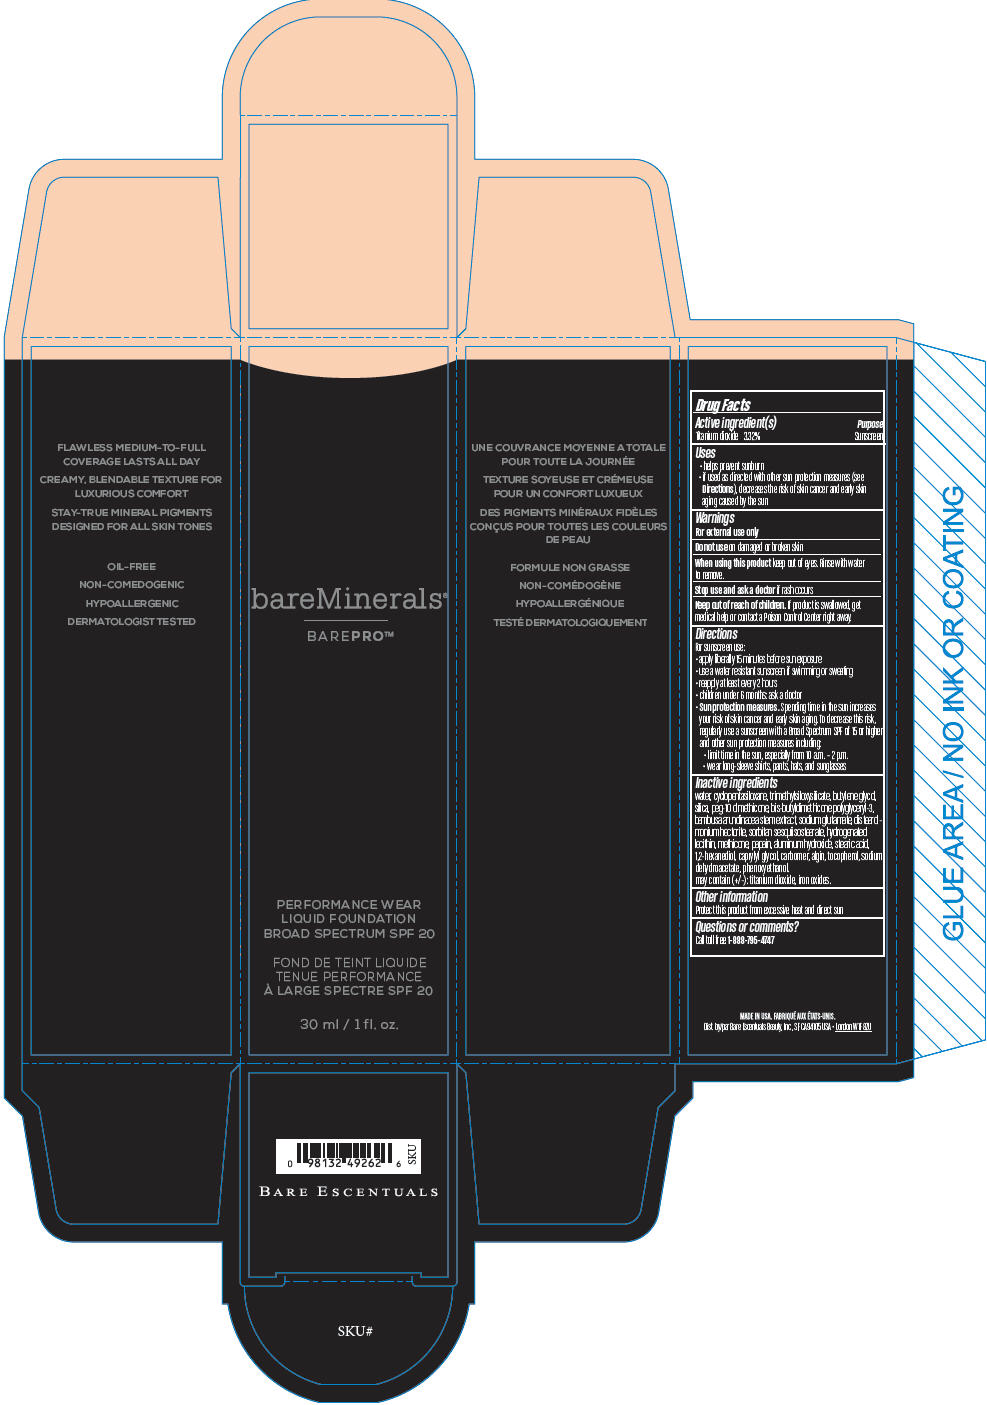 PRINCIPAL DISPLAY PANEL - 30 ml Bottle Carton - Silk 14